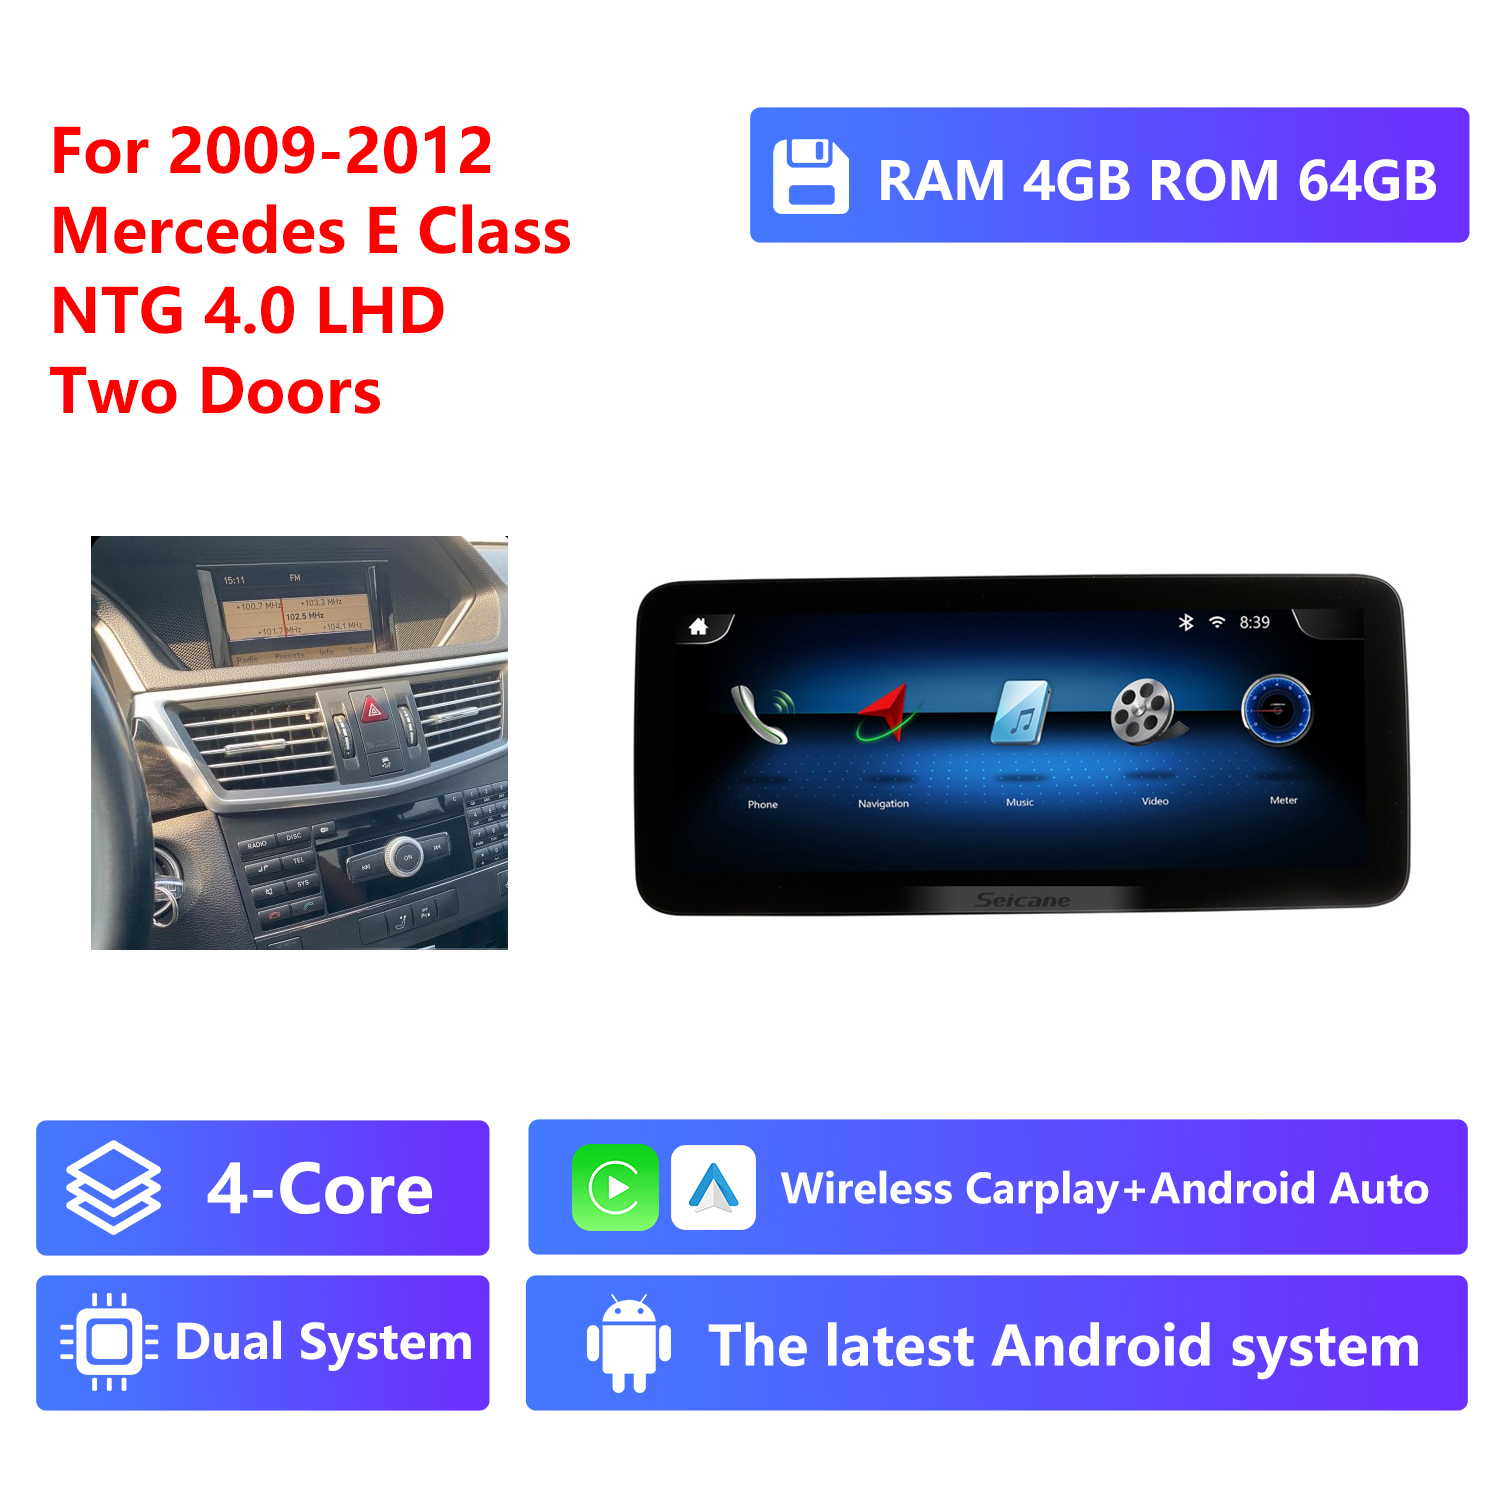 4-Core RAM 4G ROM 64G,LHD,NTG4.0,two doors